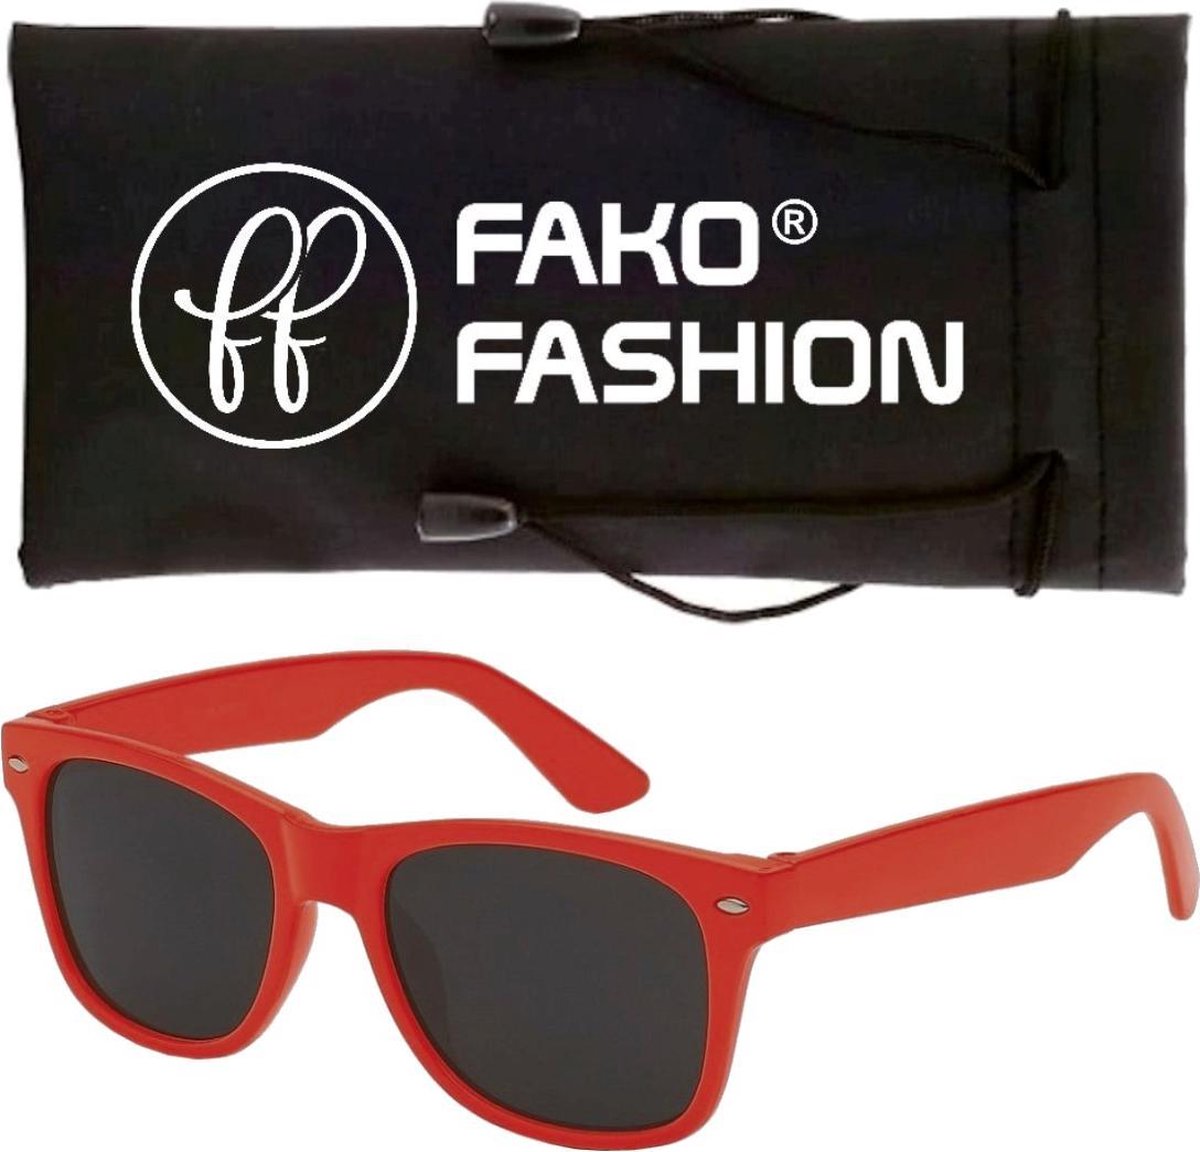 Fako Fashion® - Zonnebril - Classic - Rood